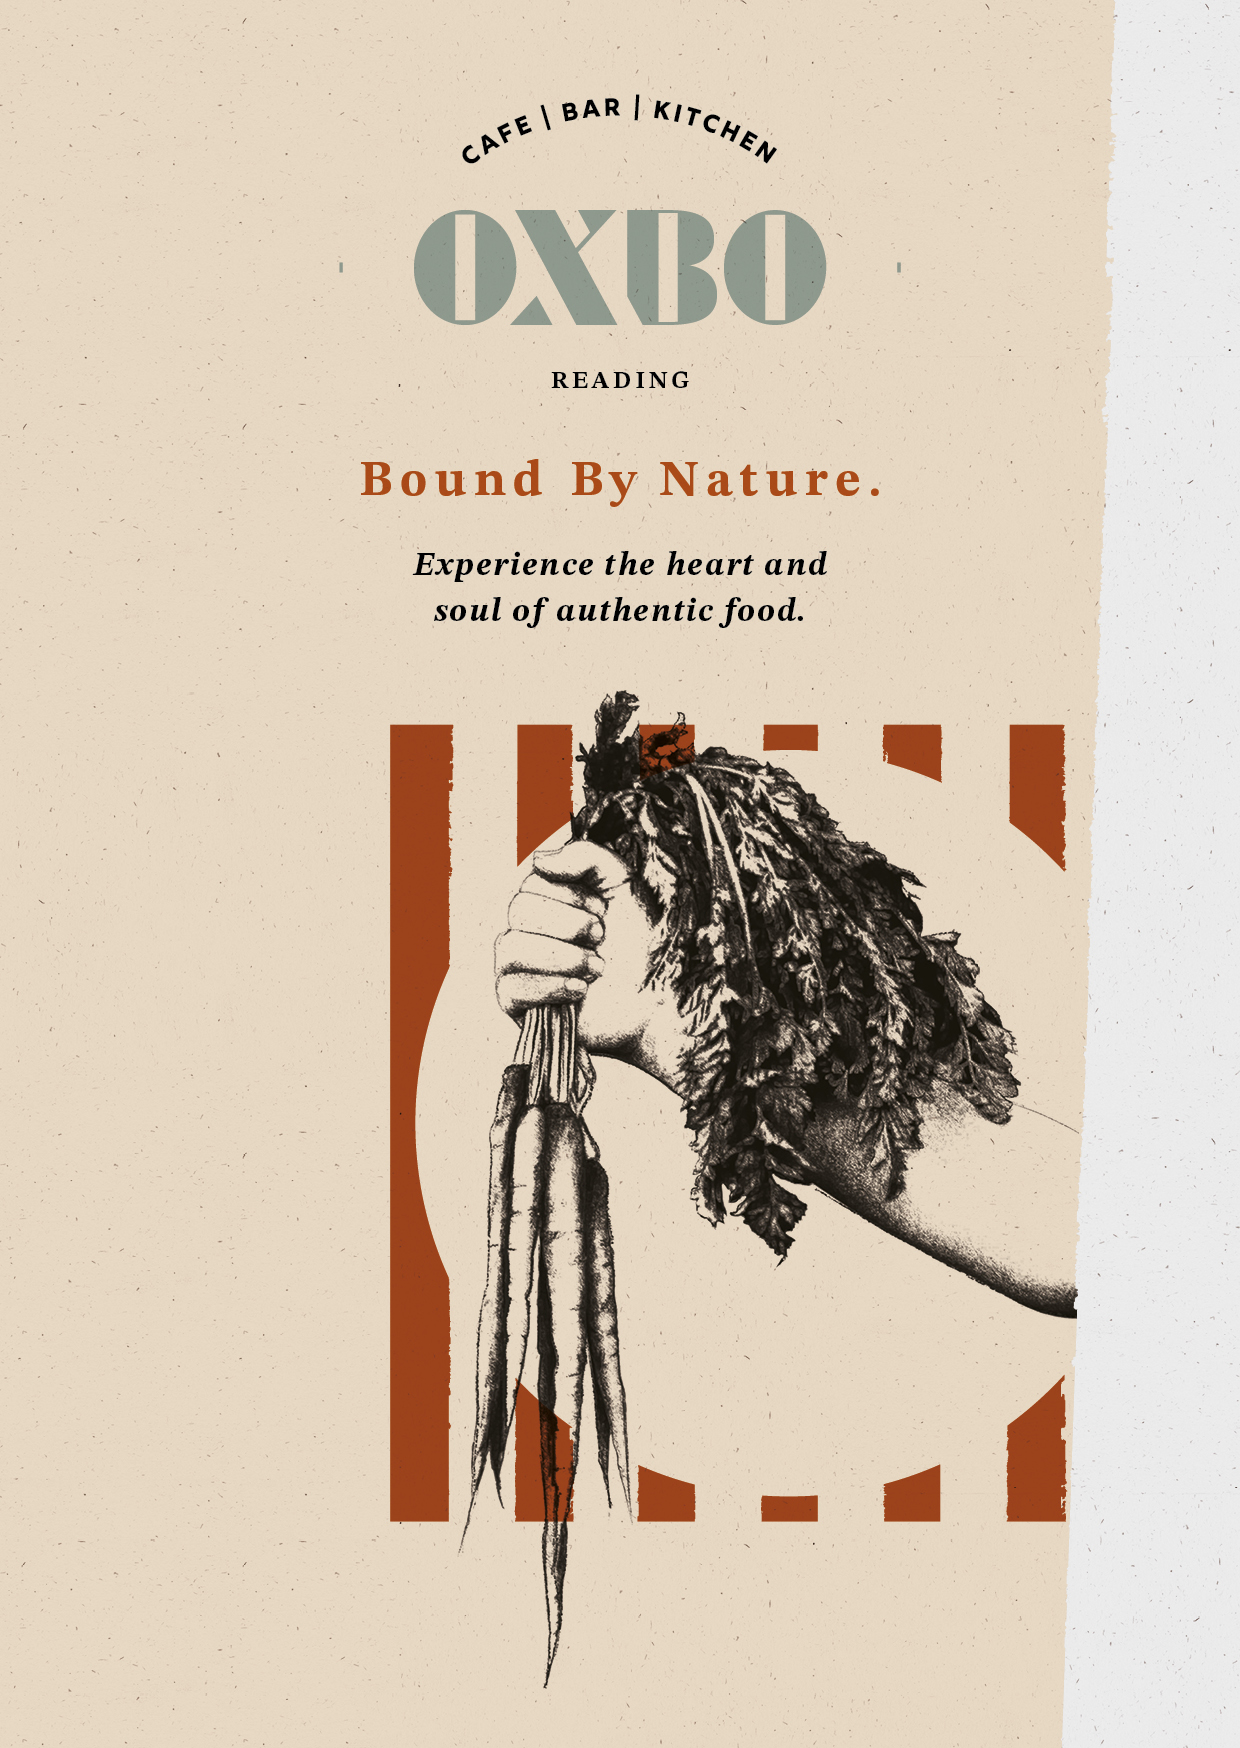 oxbo reading, flyer